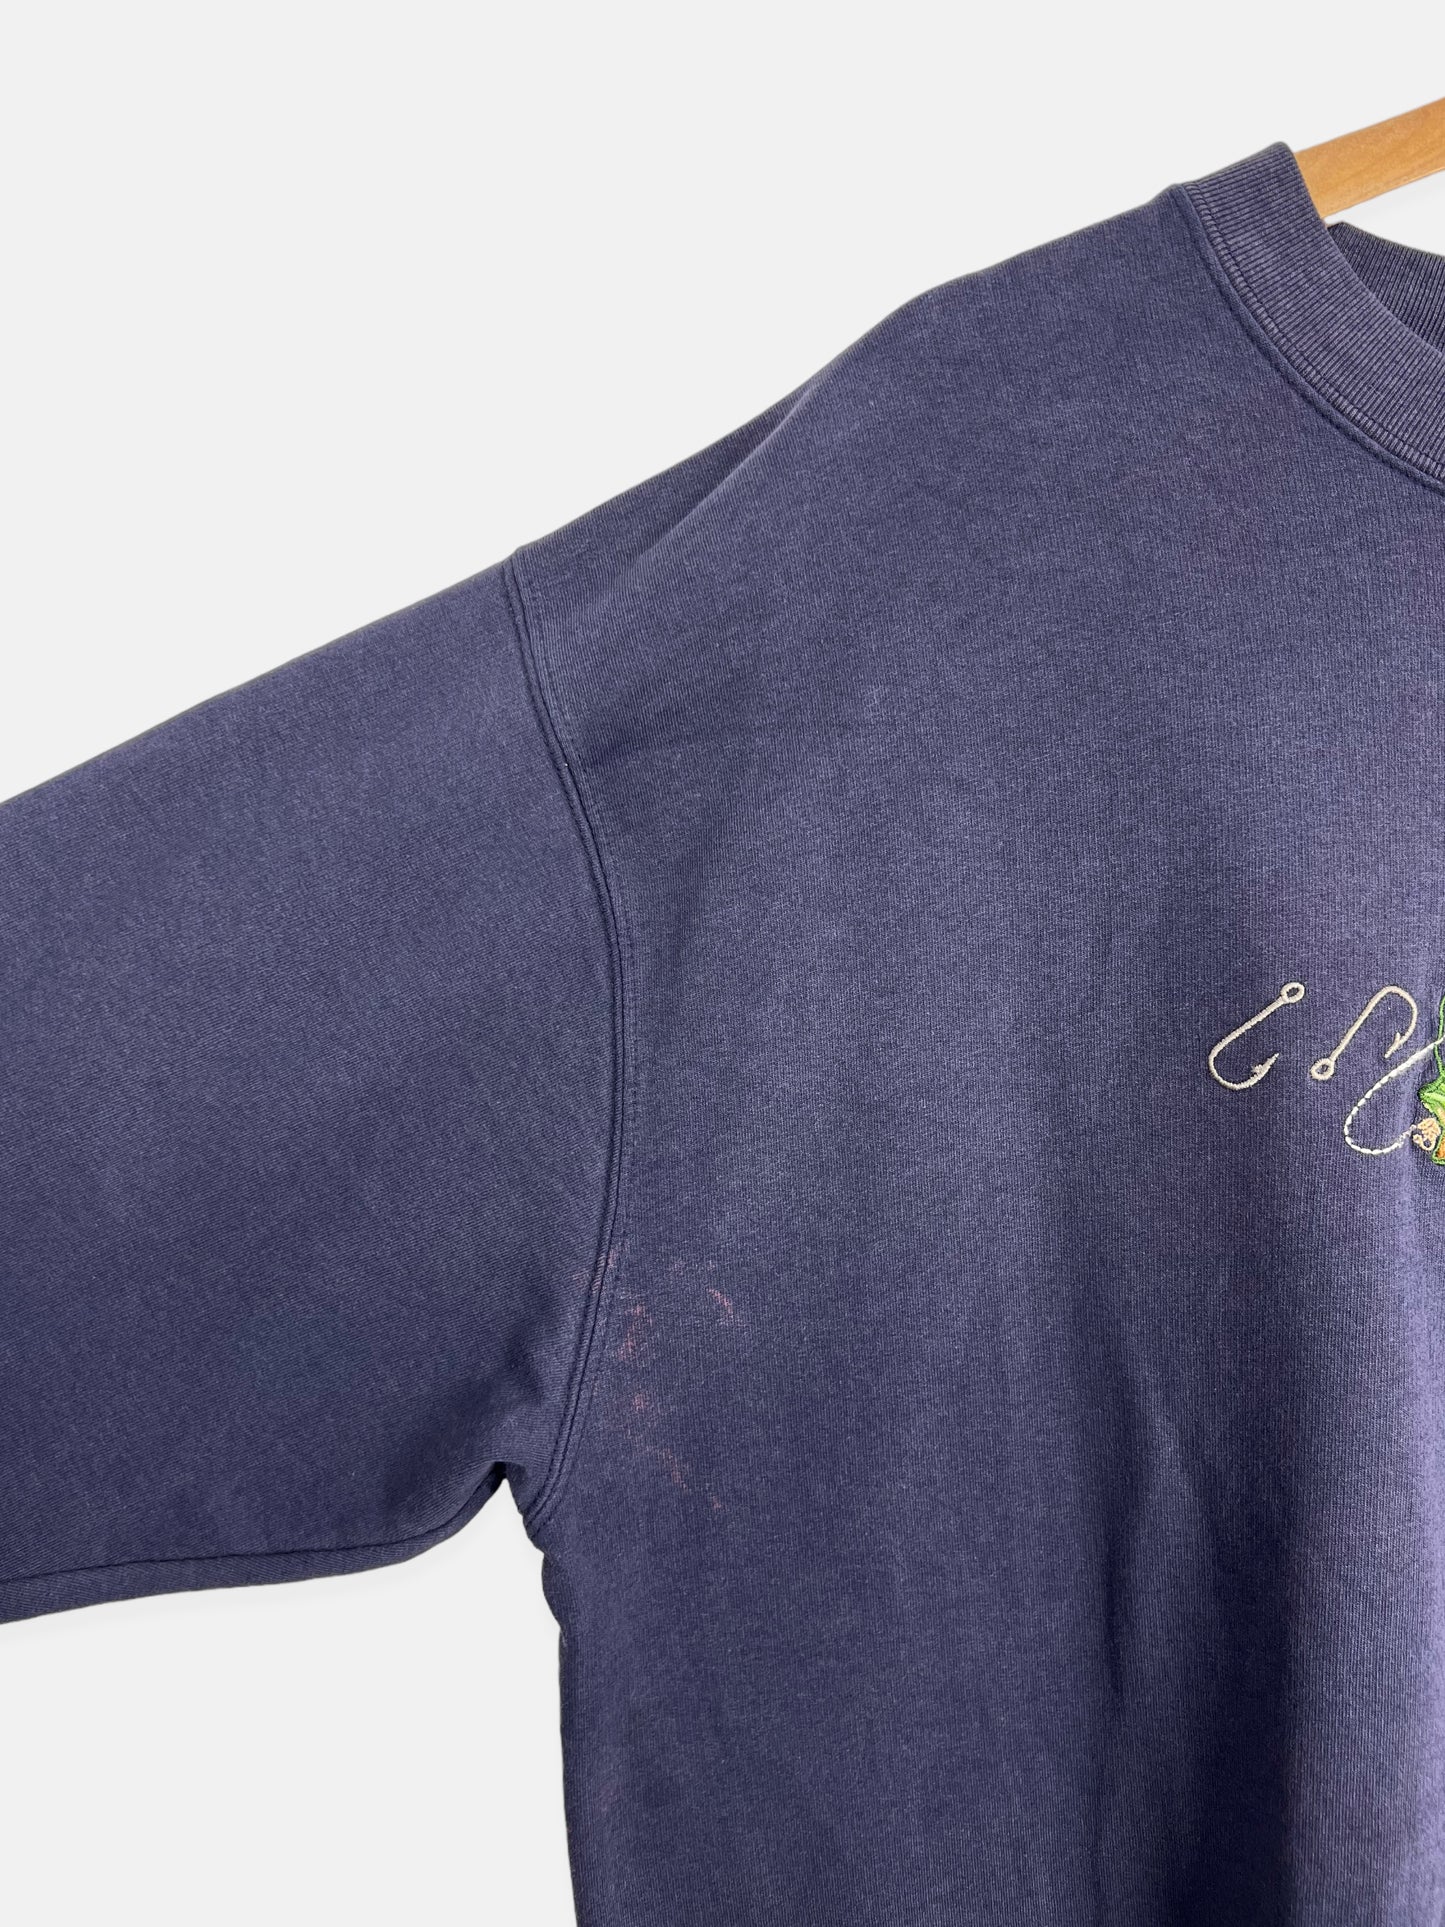 90's Bass Embroidered Vintage Sweatshirt Size M-L